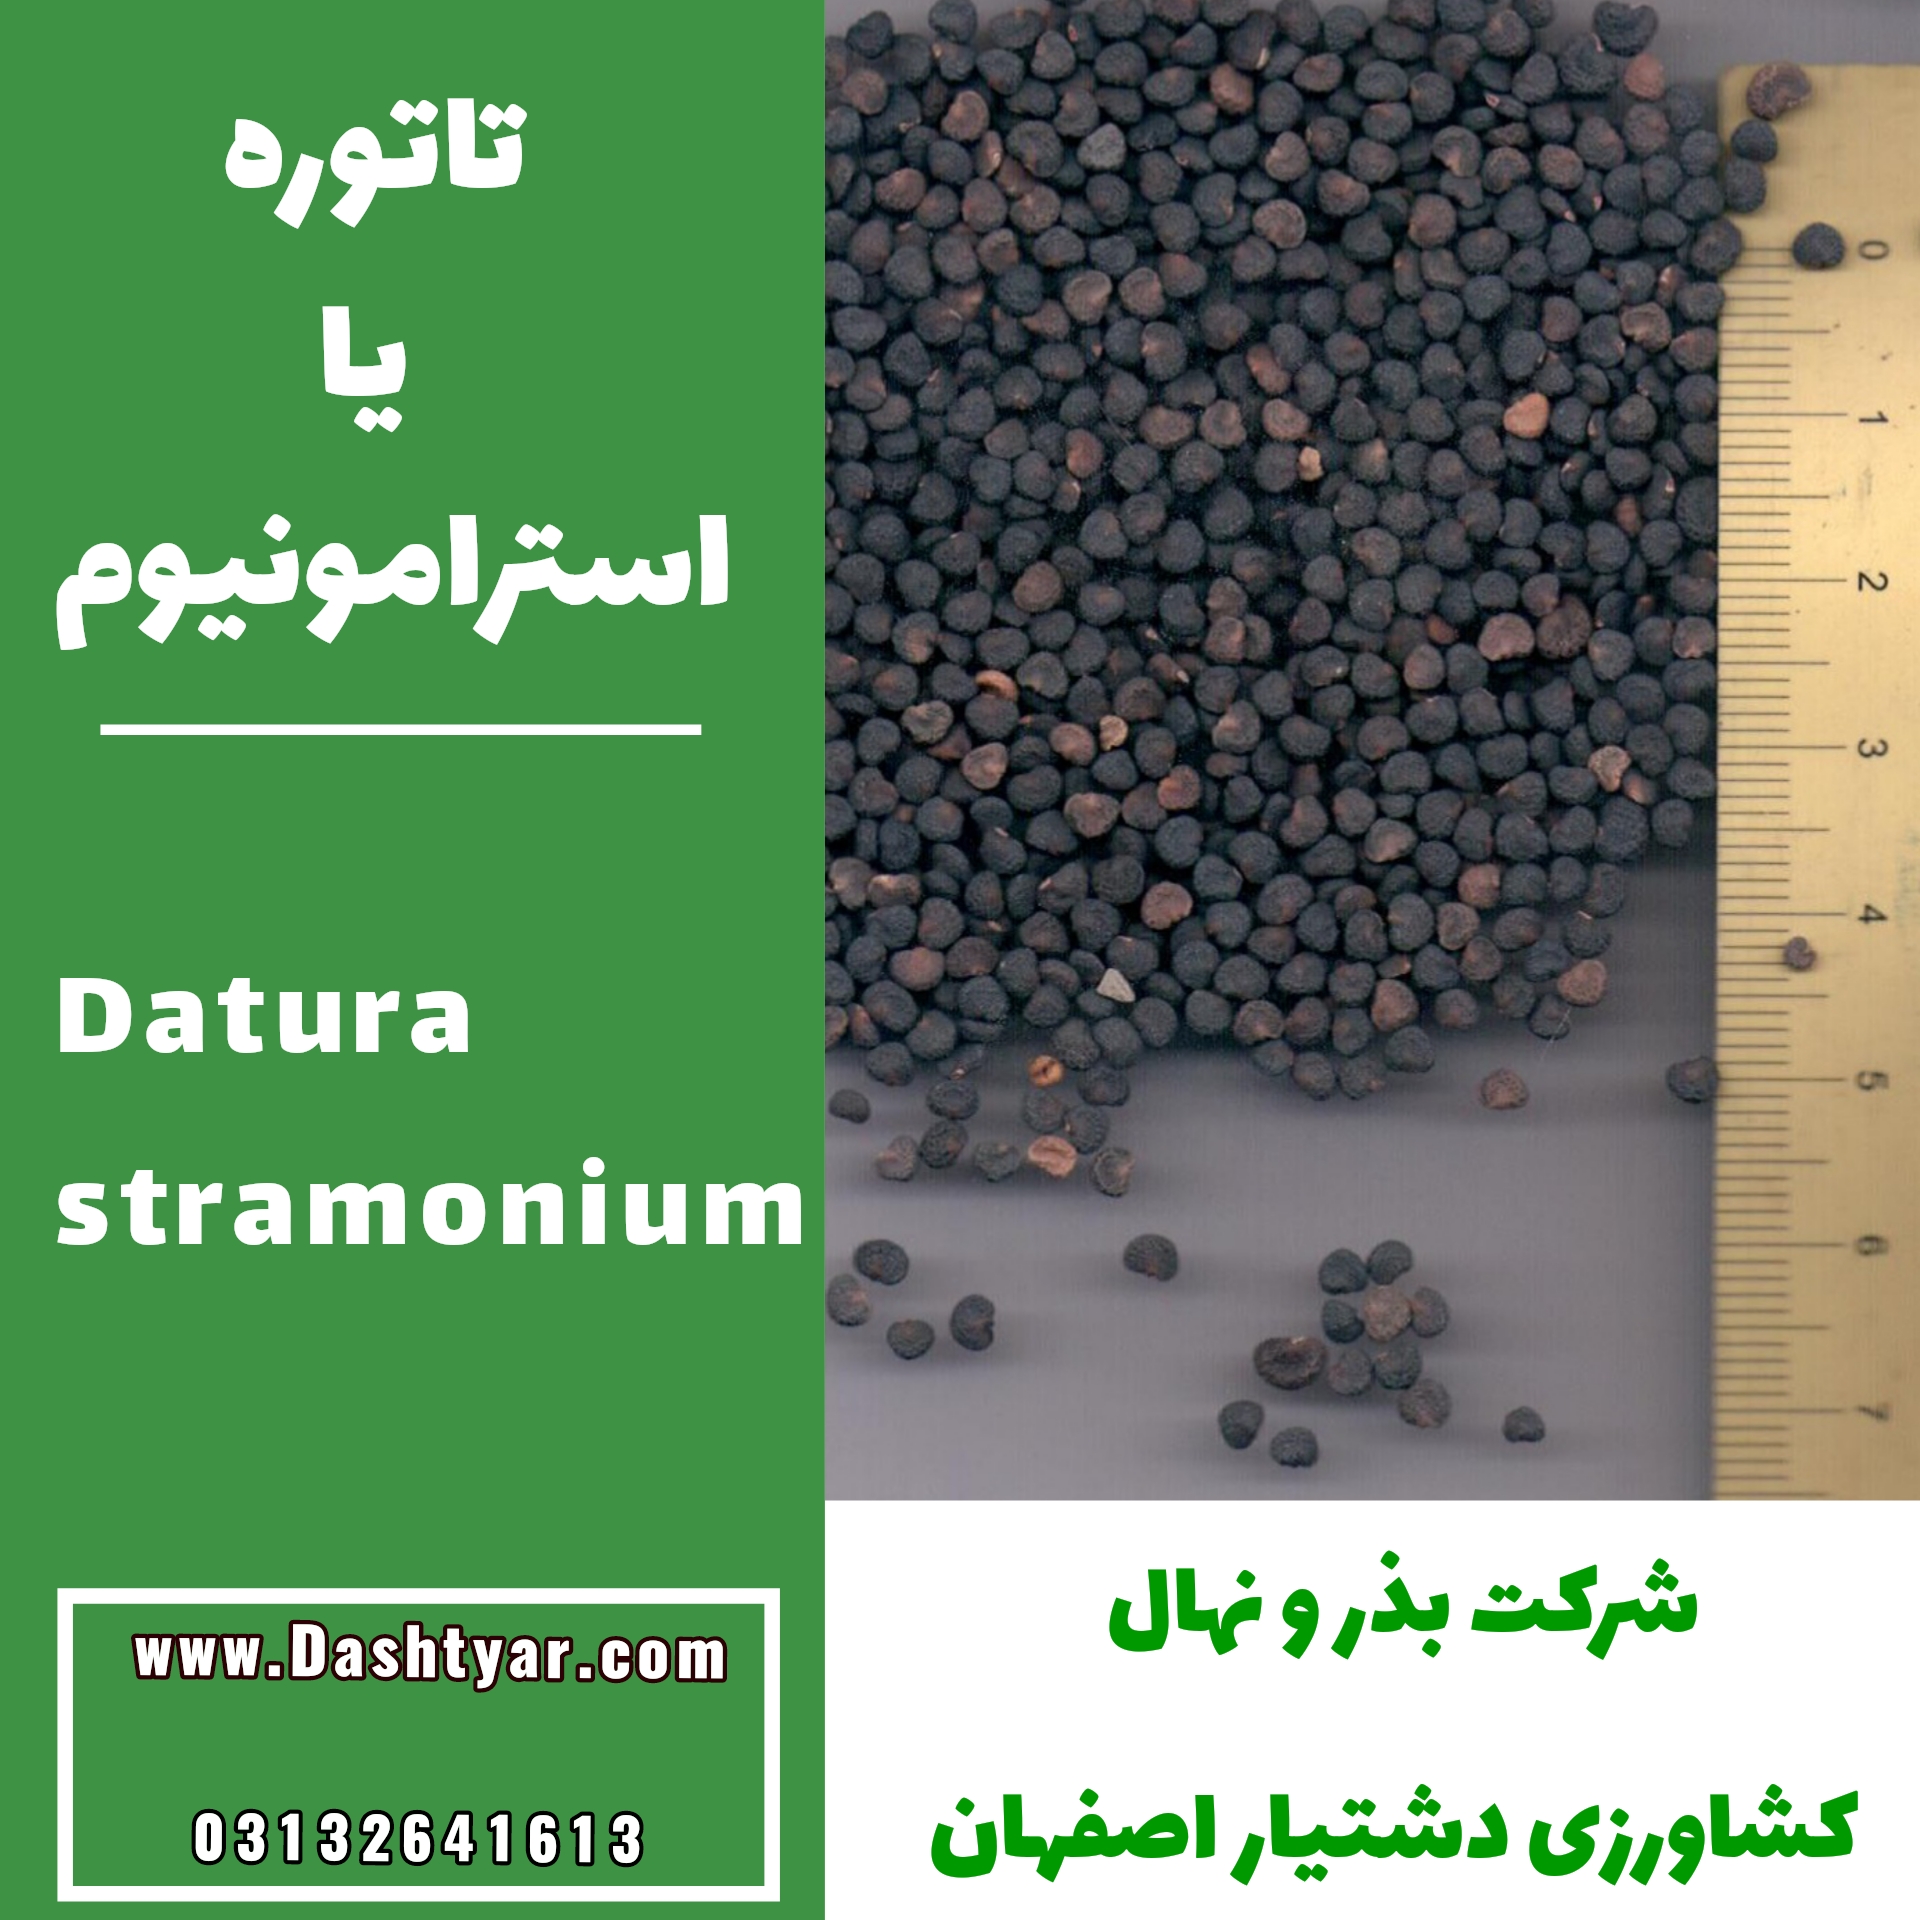 بذر تاتوره یا استرامونیوم(Datura stramonium)